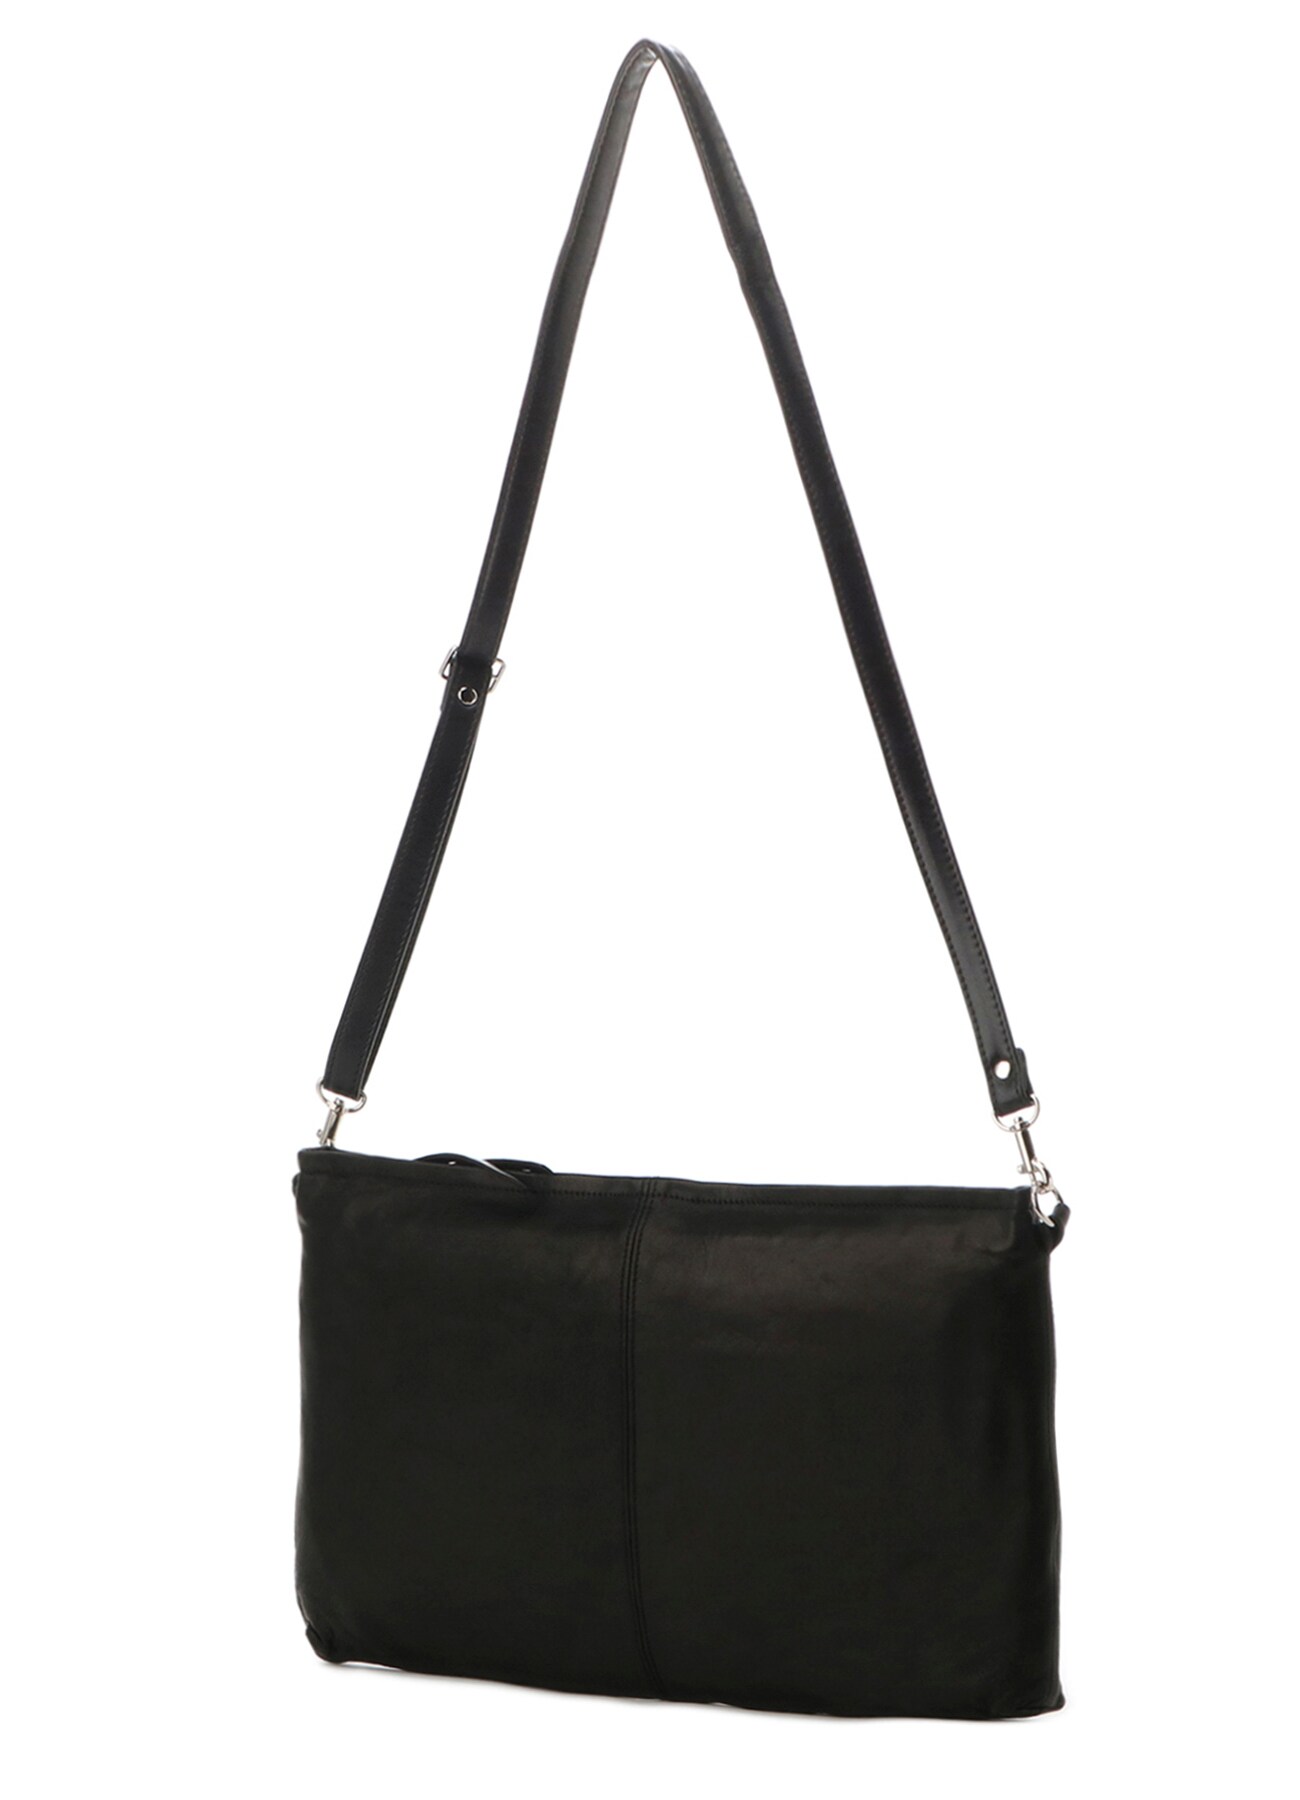 Polène | Bag - Béri with Chain - Black Textured Leather